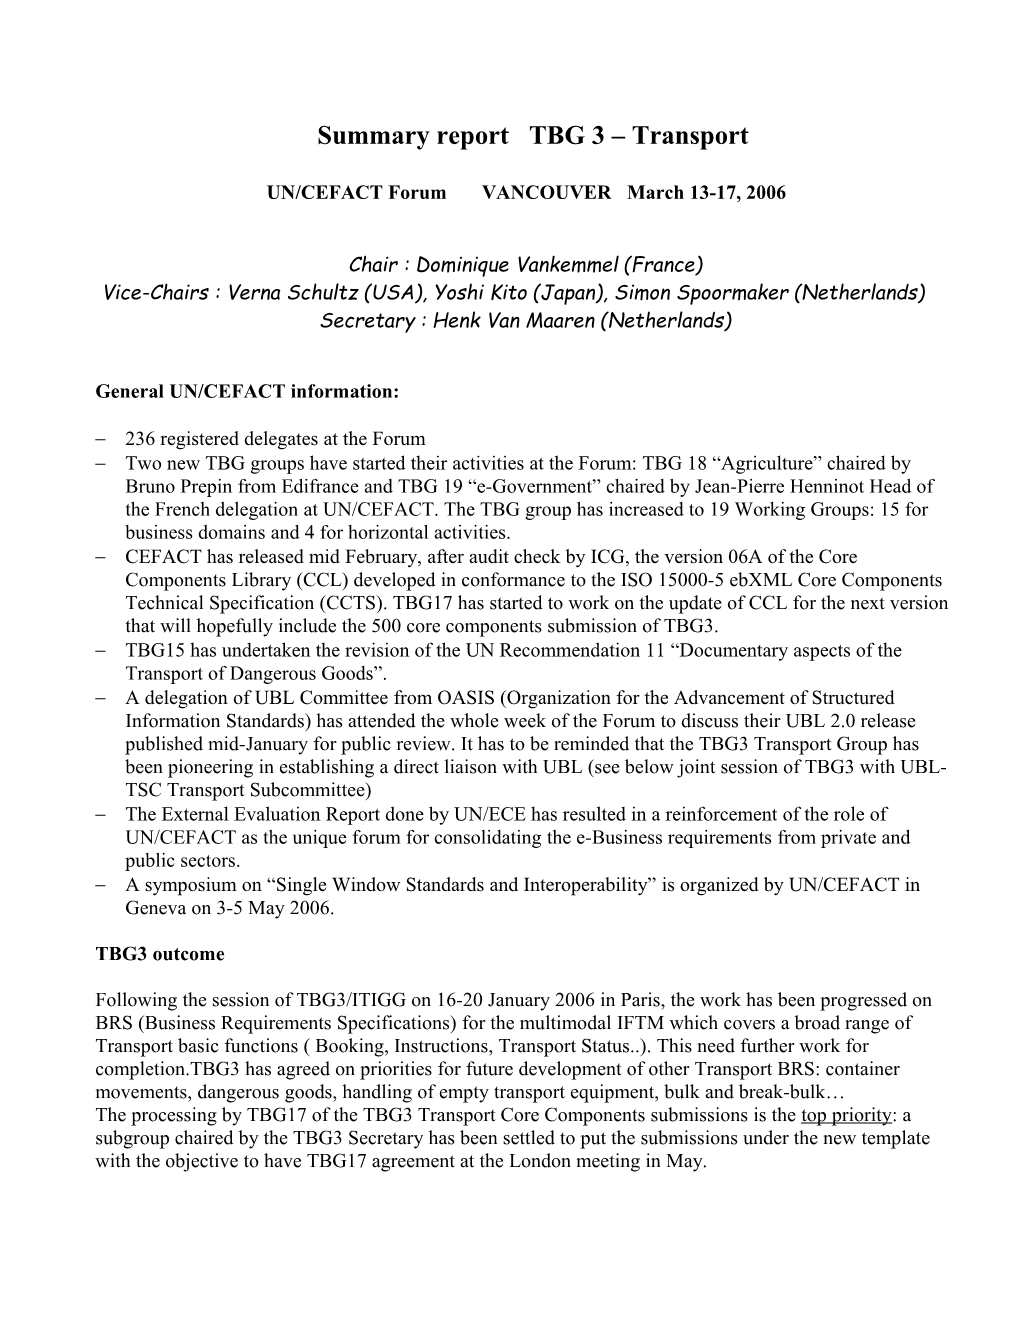 Summary Report TBG 3 Transport